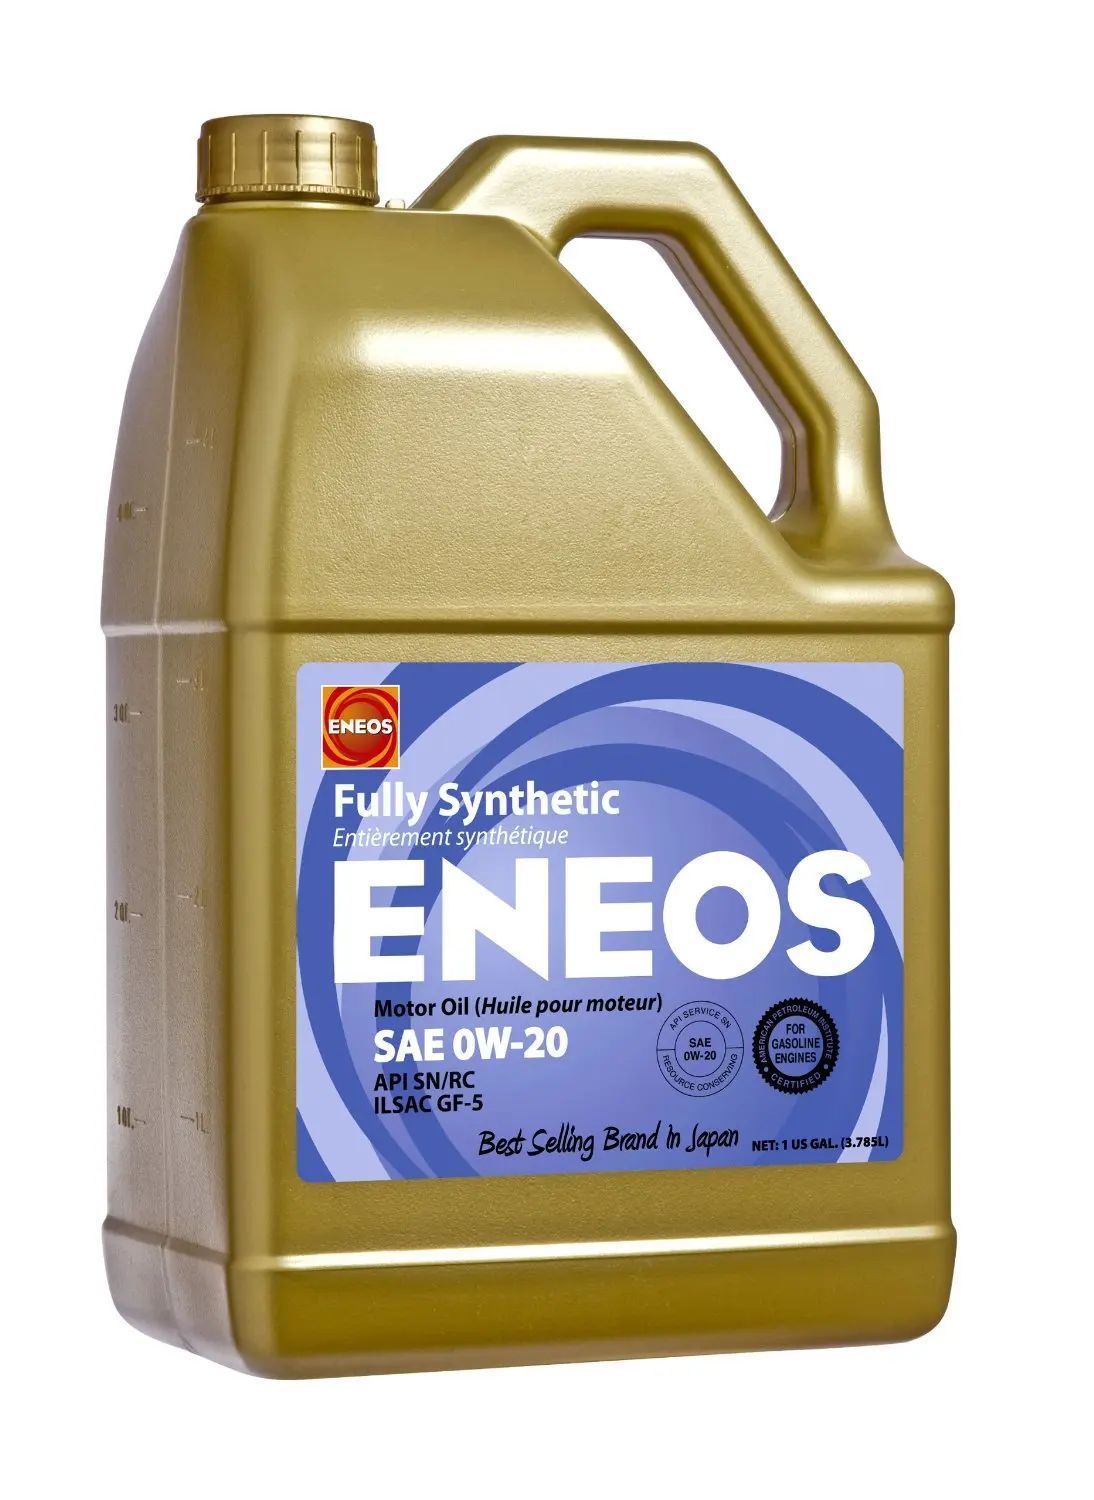 Api gf 4. Fully Synthetic 5w30 ENEOS. Масло моторное fully-Synthetic SN/gf-5. Масло API SN/gf5. Моторное масло енеос 5w30 допуски.